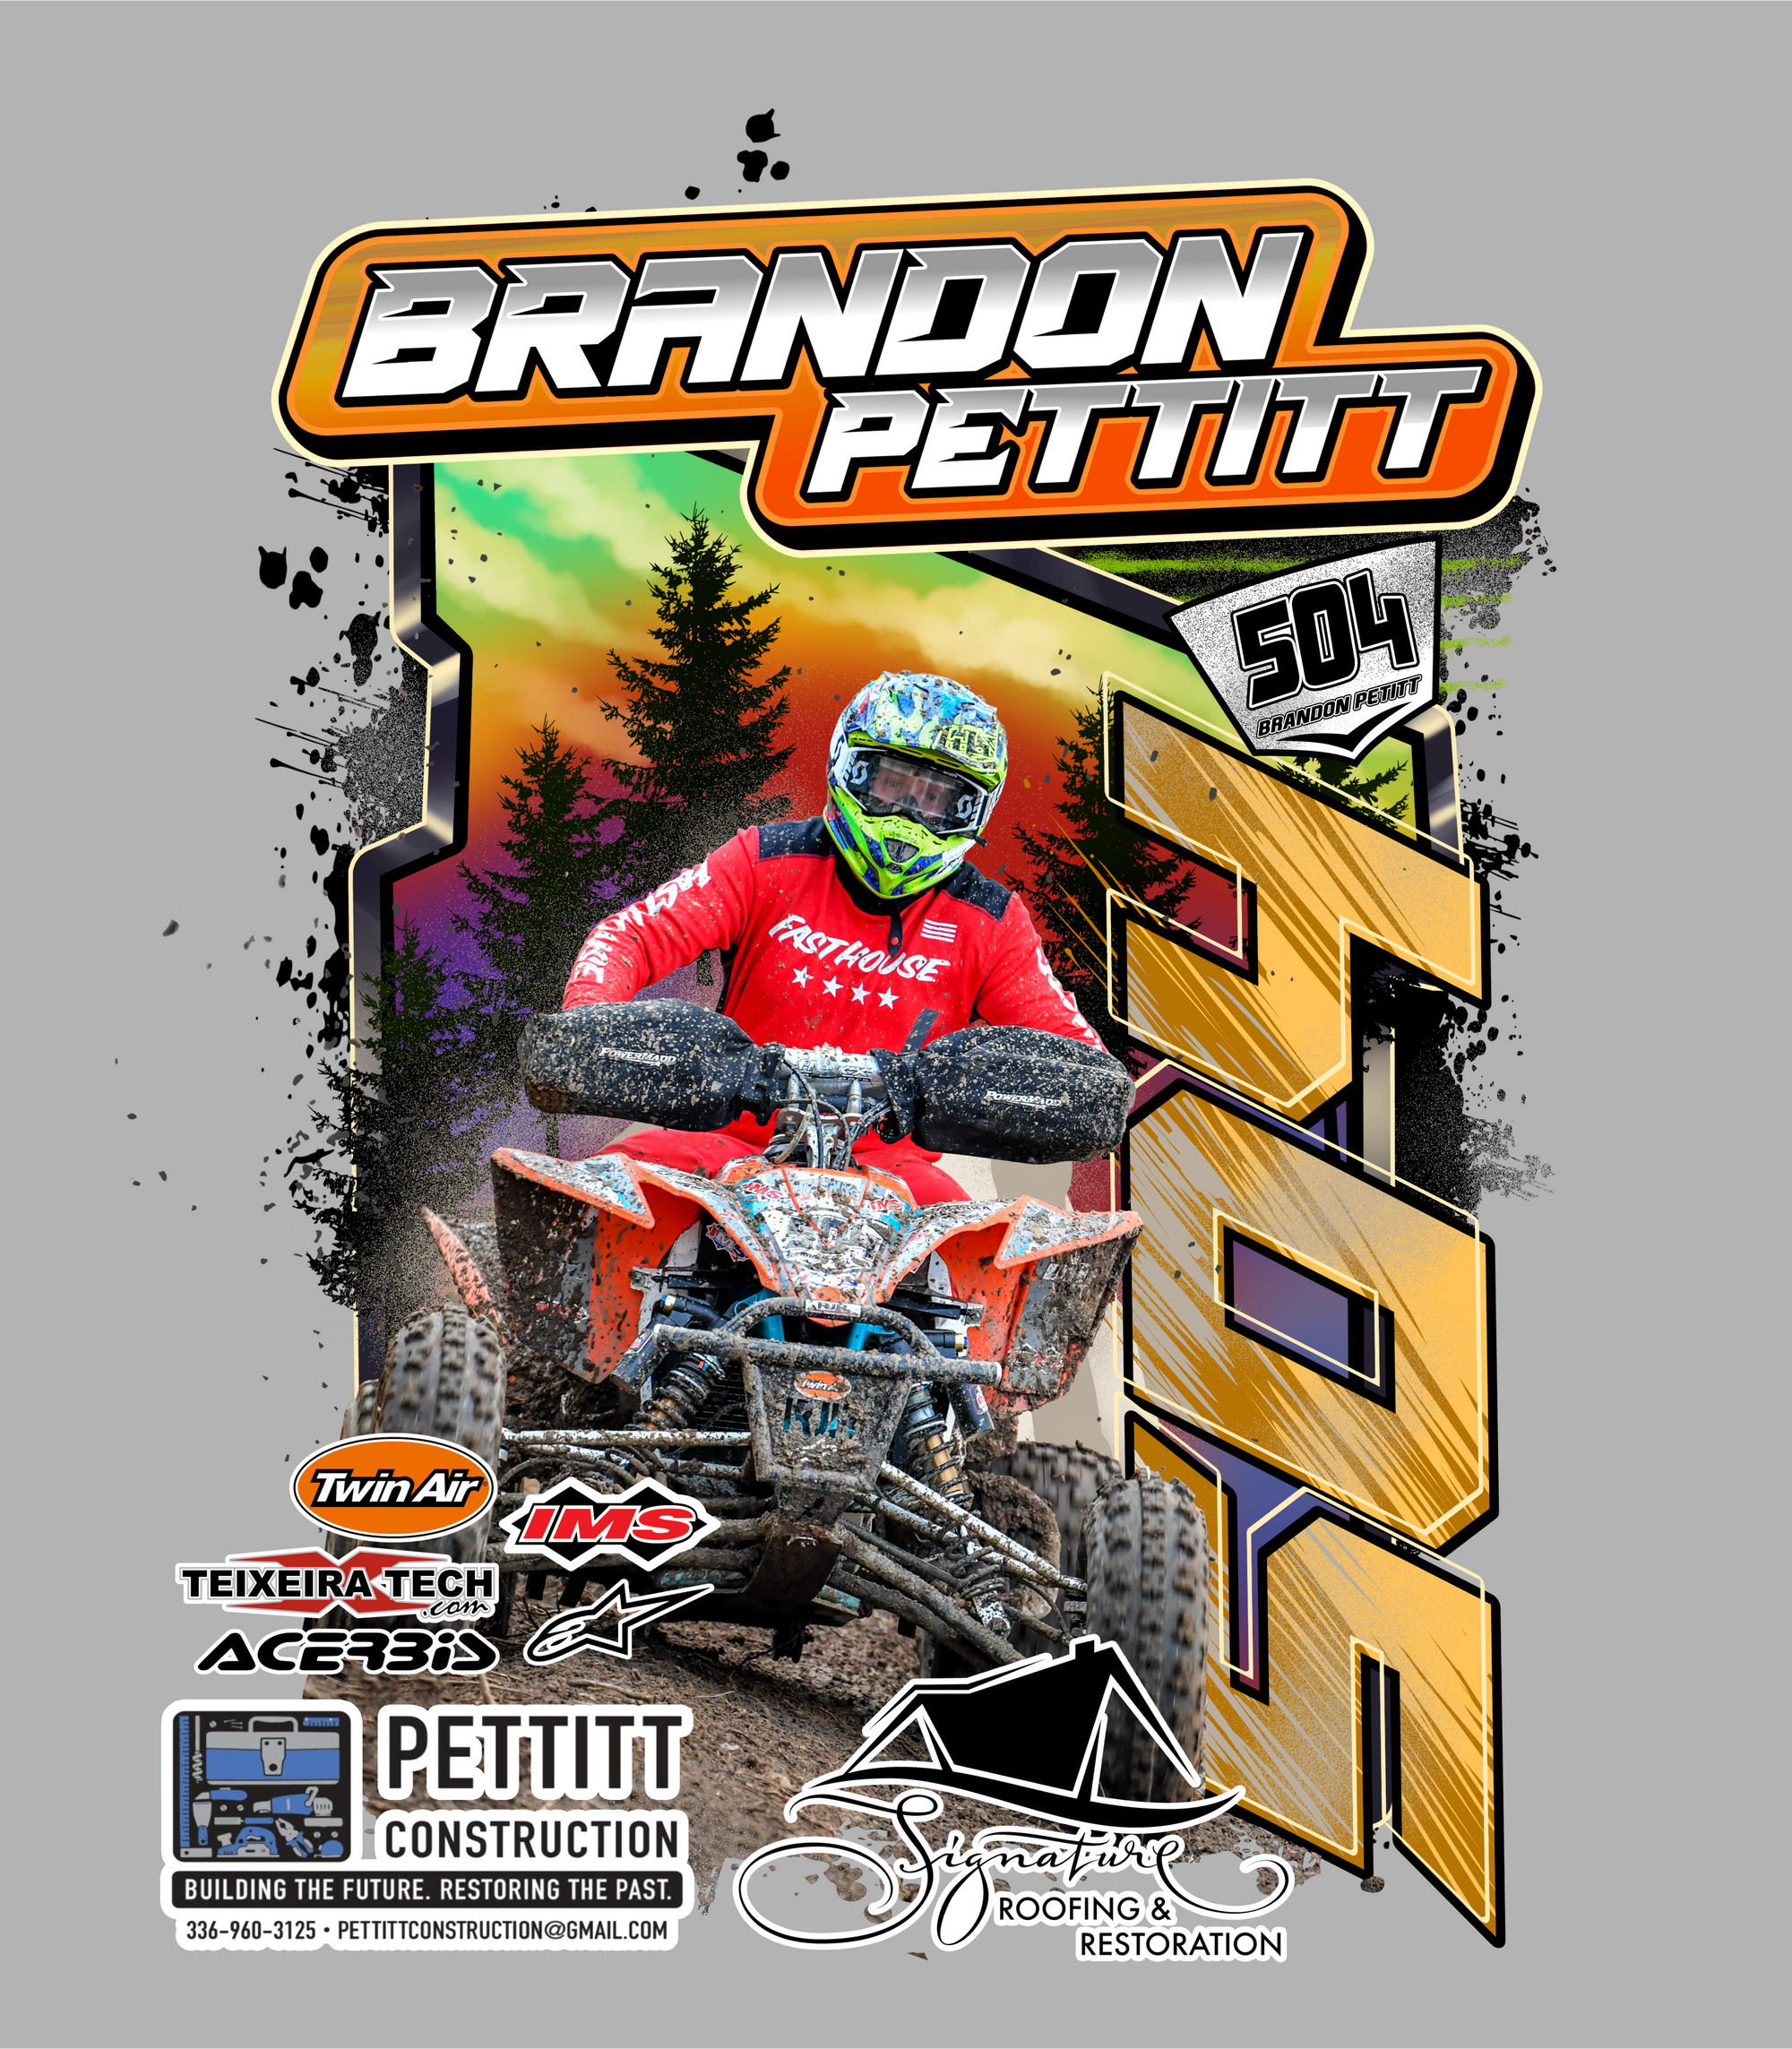 Brandon Pettitt